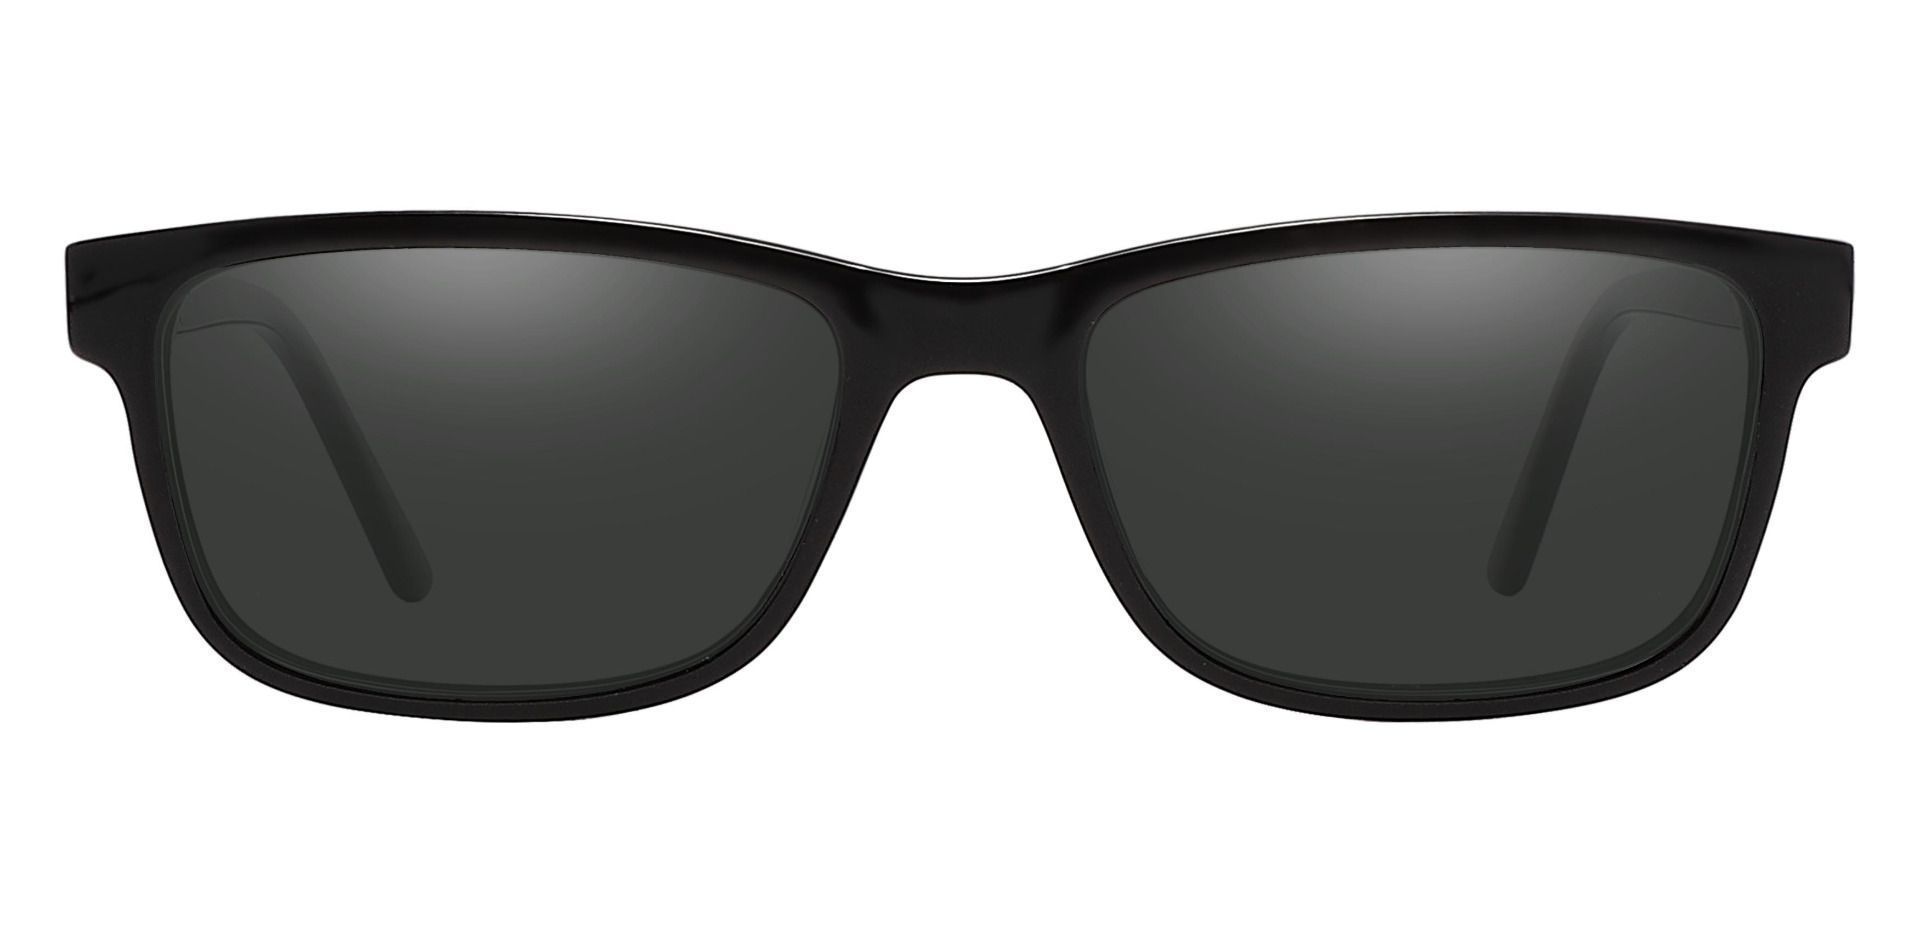 Cory Rectangle Prescription Sunglasses - Black Frame With Gray Lenses